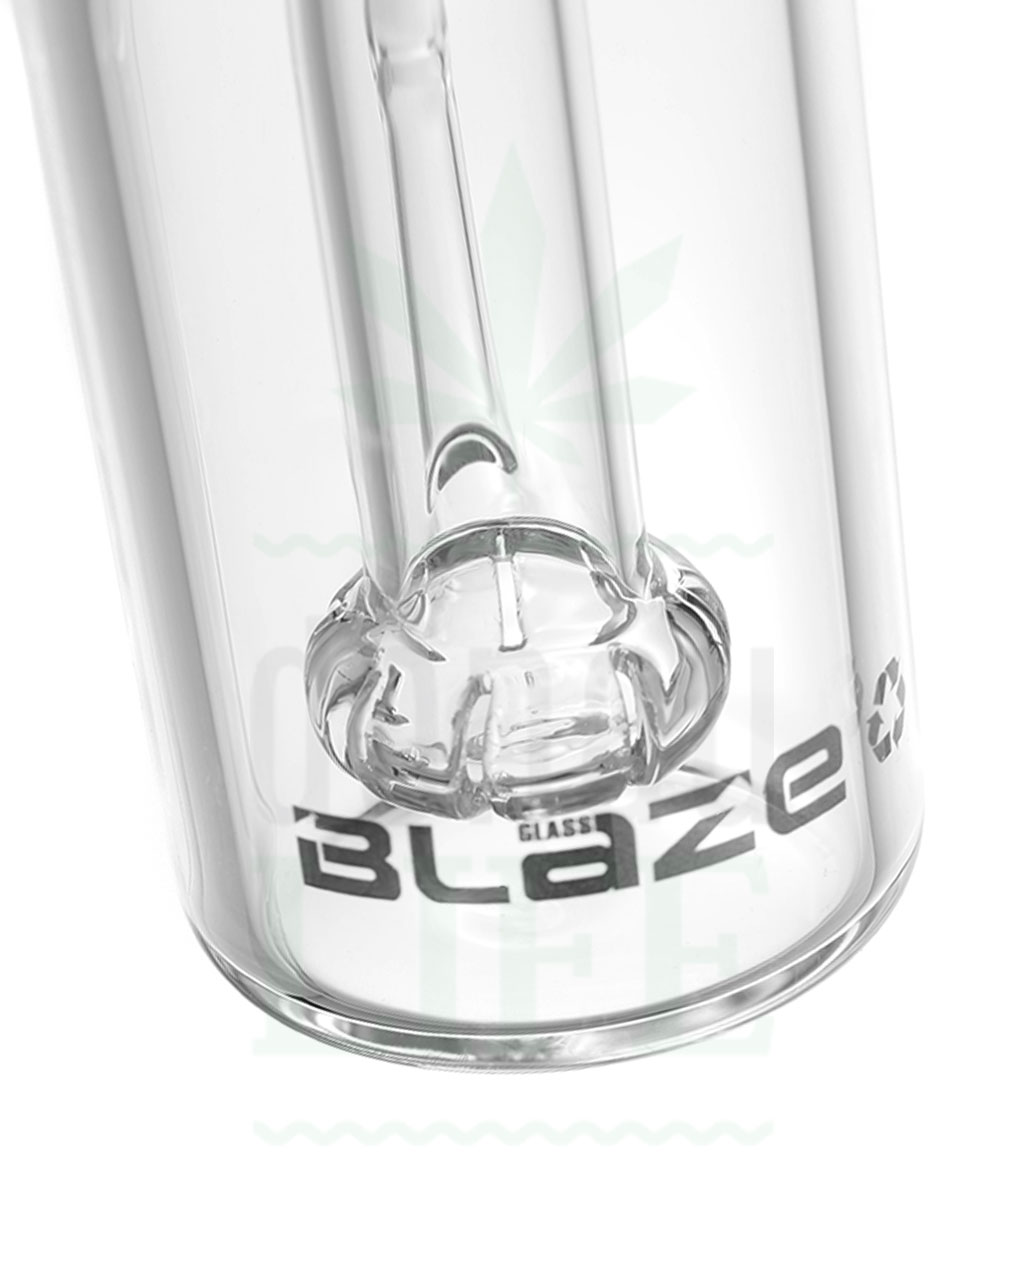 bong-discount Wasserpfeife, Glas-Bong, Glasblubber, 13 cm